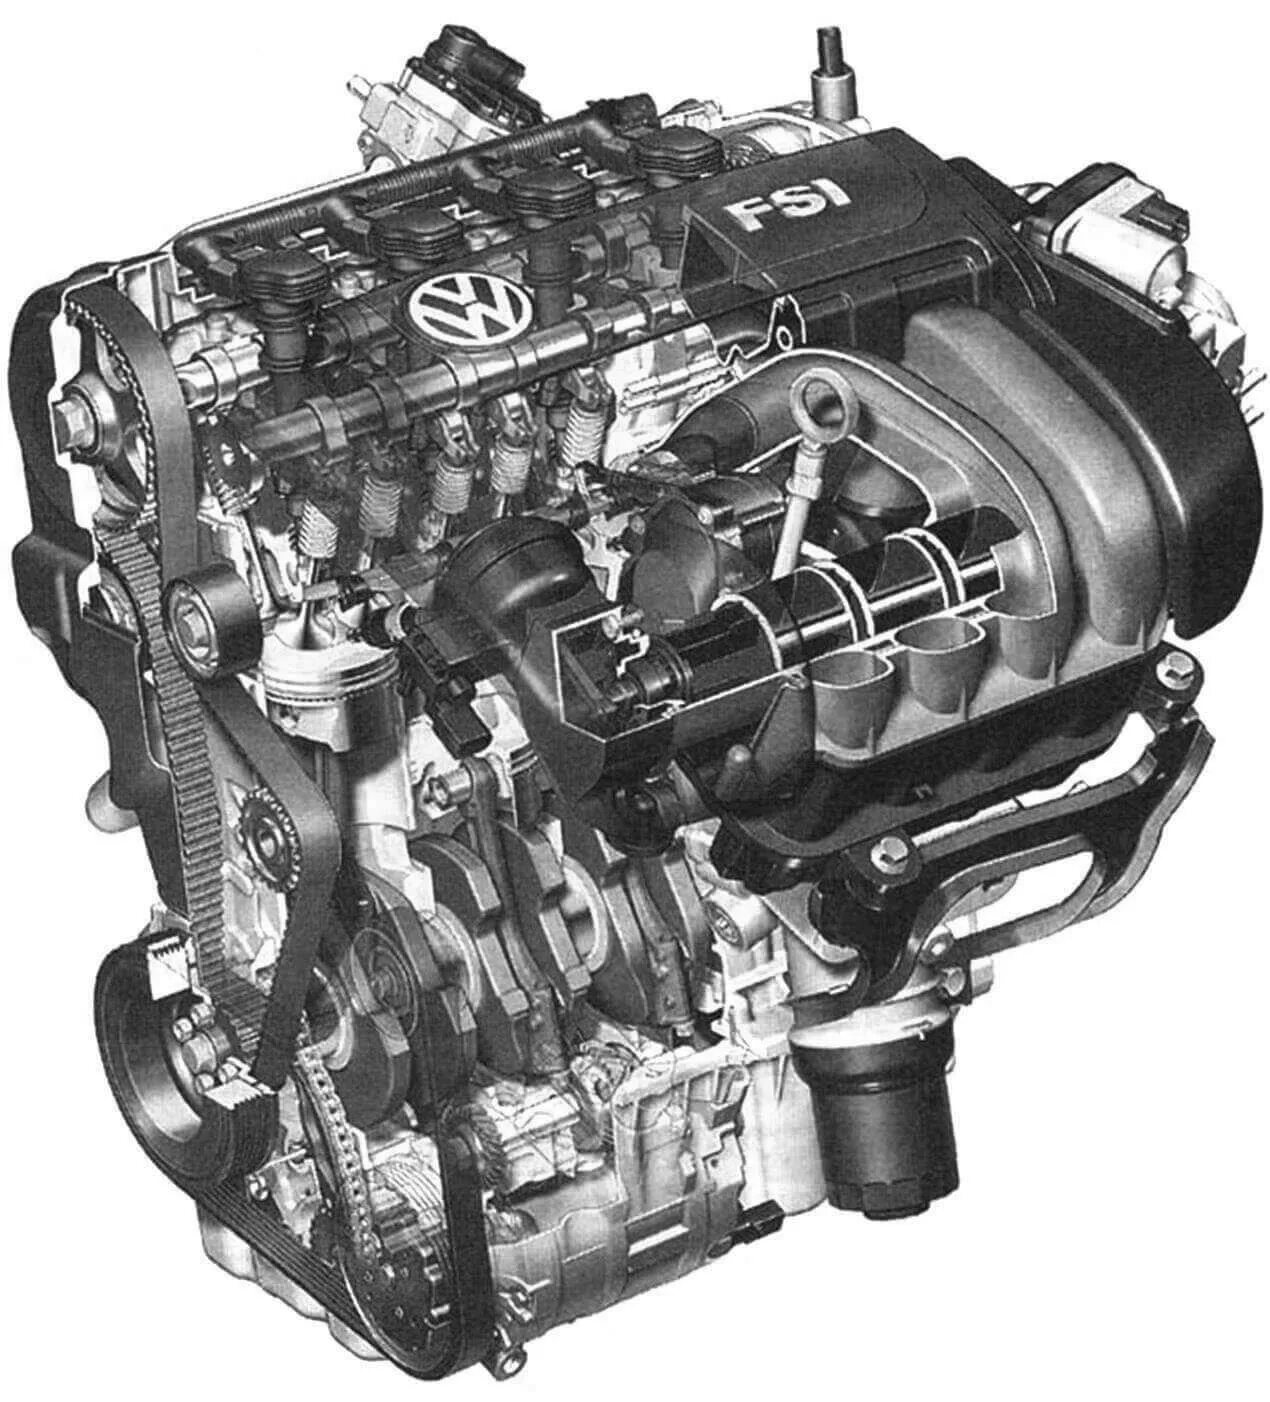 Дизель volkswagen 2.0. Мотор 2.0 FSI. Двигатель Volkswagen TSI 2.0. Двигатель Ауди 2.0 FSI. 1 6 FSI Фольксваген двигатель.